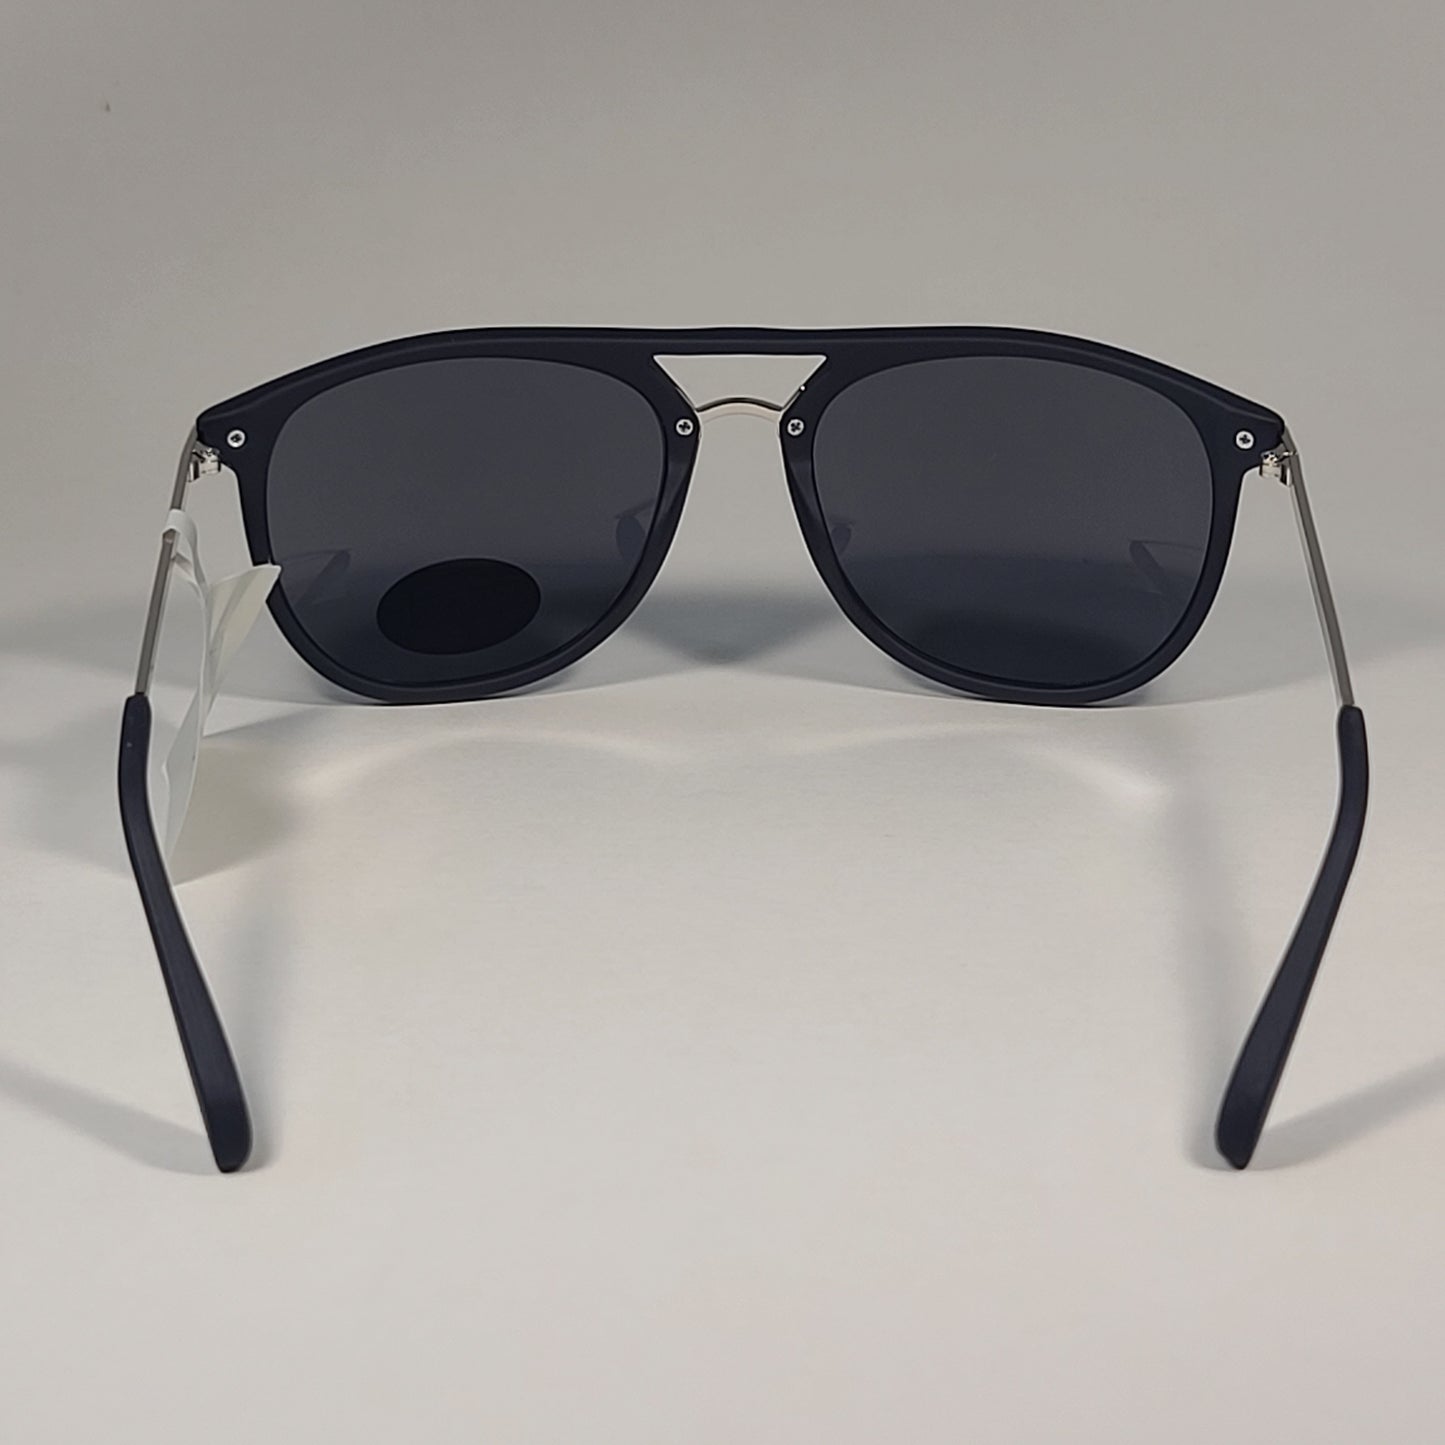 Fossil FM141 Pilot Style Sunglasses Matte Black Silver Frame Solid Gray Lens - Sunglasses